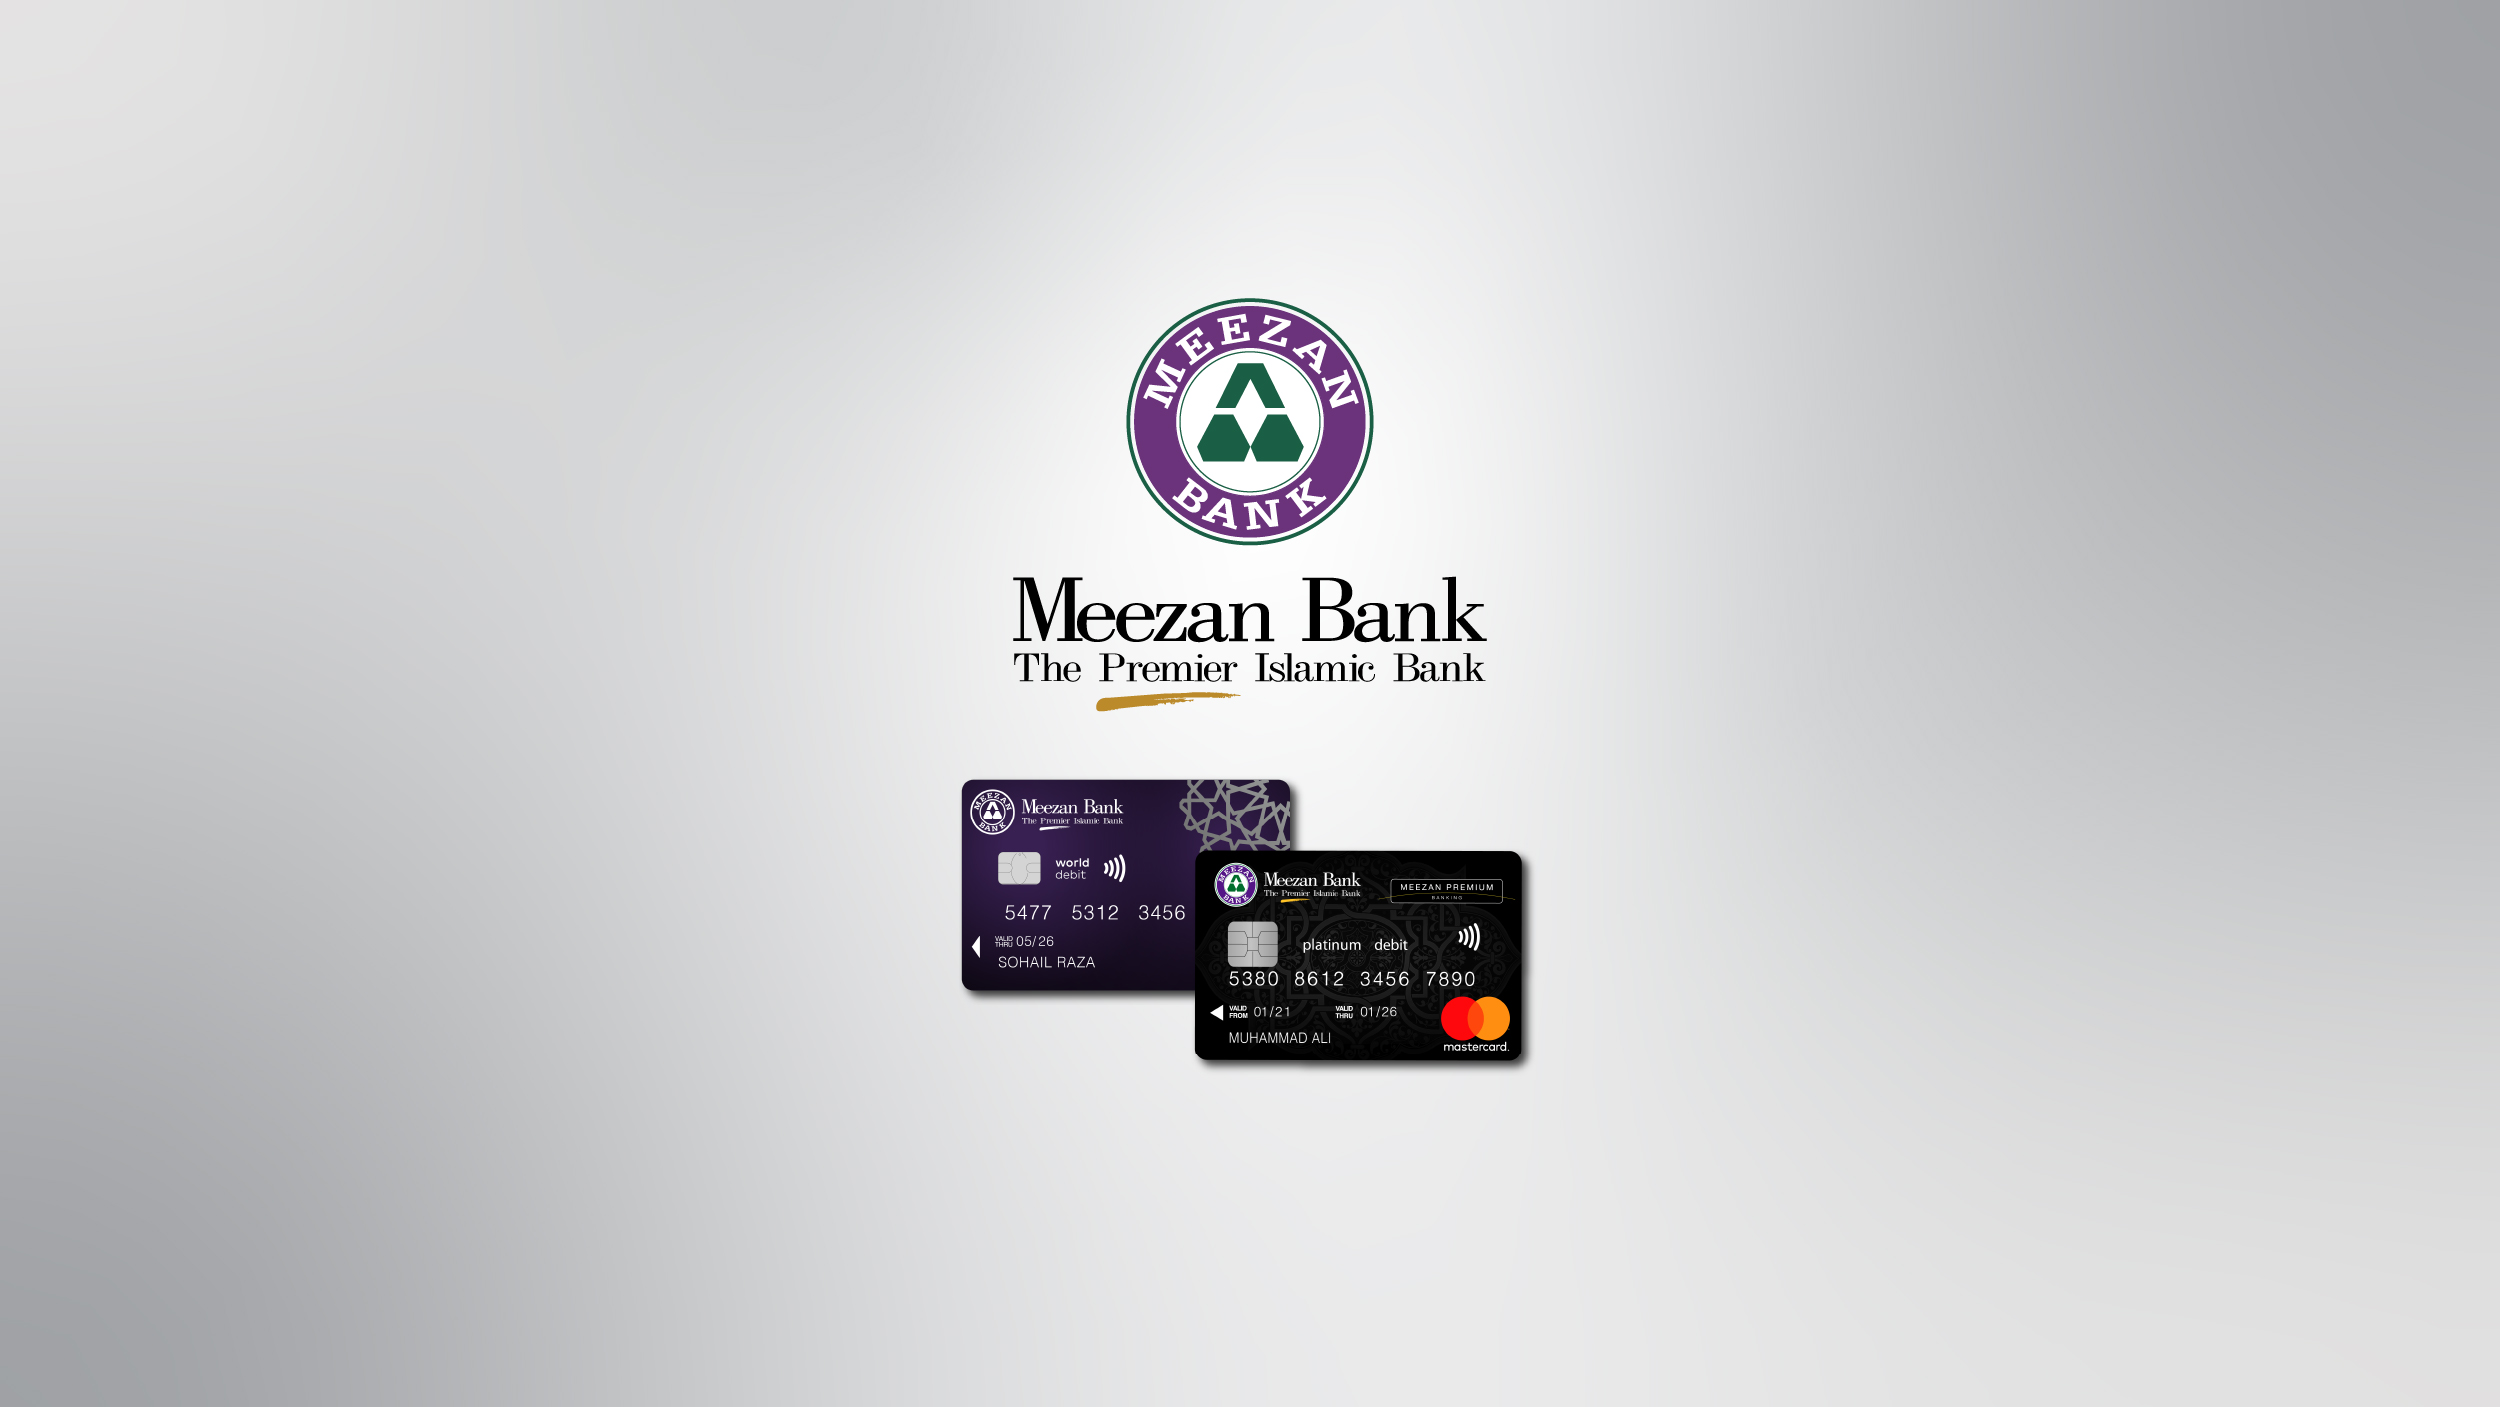 Meezan Bank - The Premier Islamic Bank